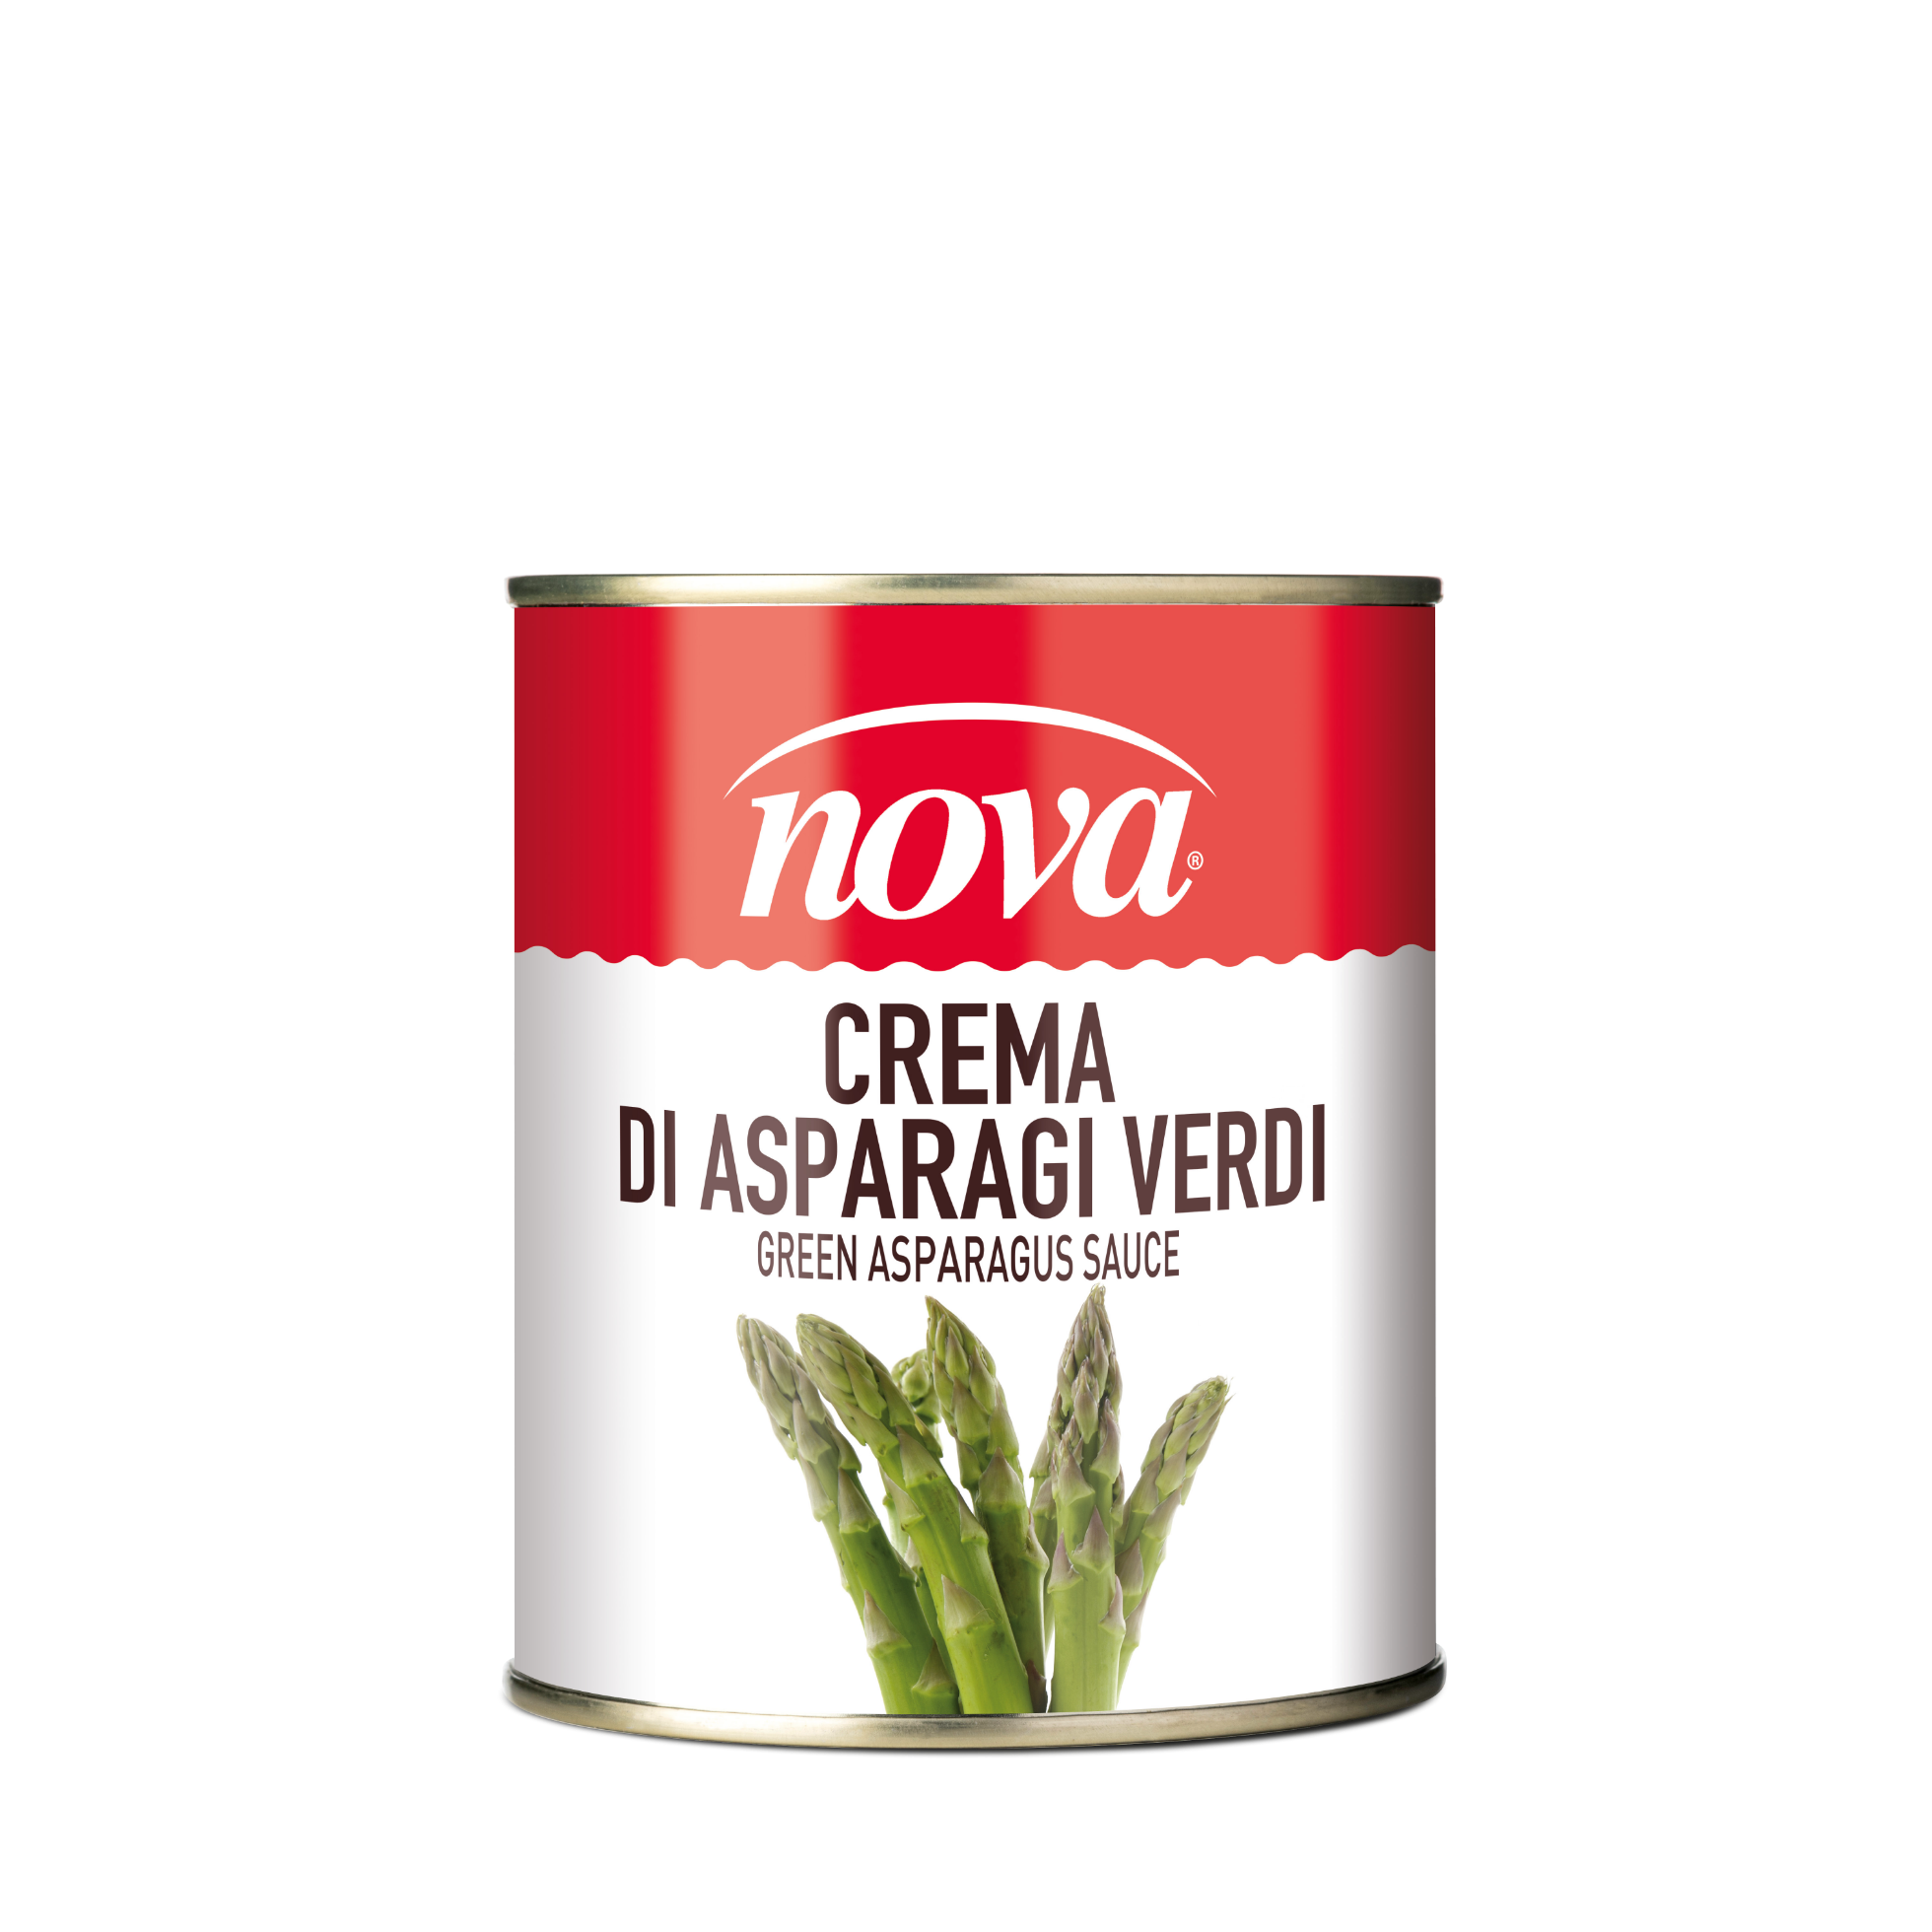 Creamy Green Asparagus Sauce